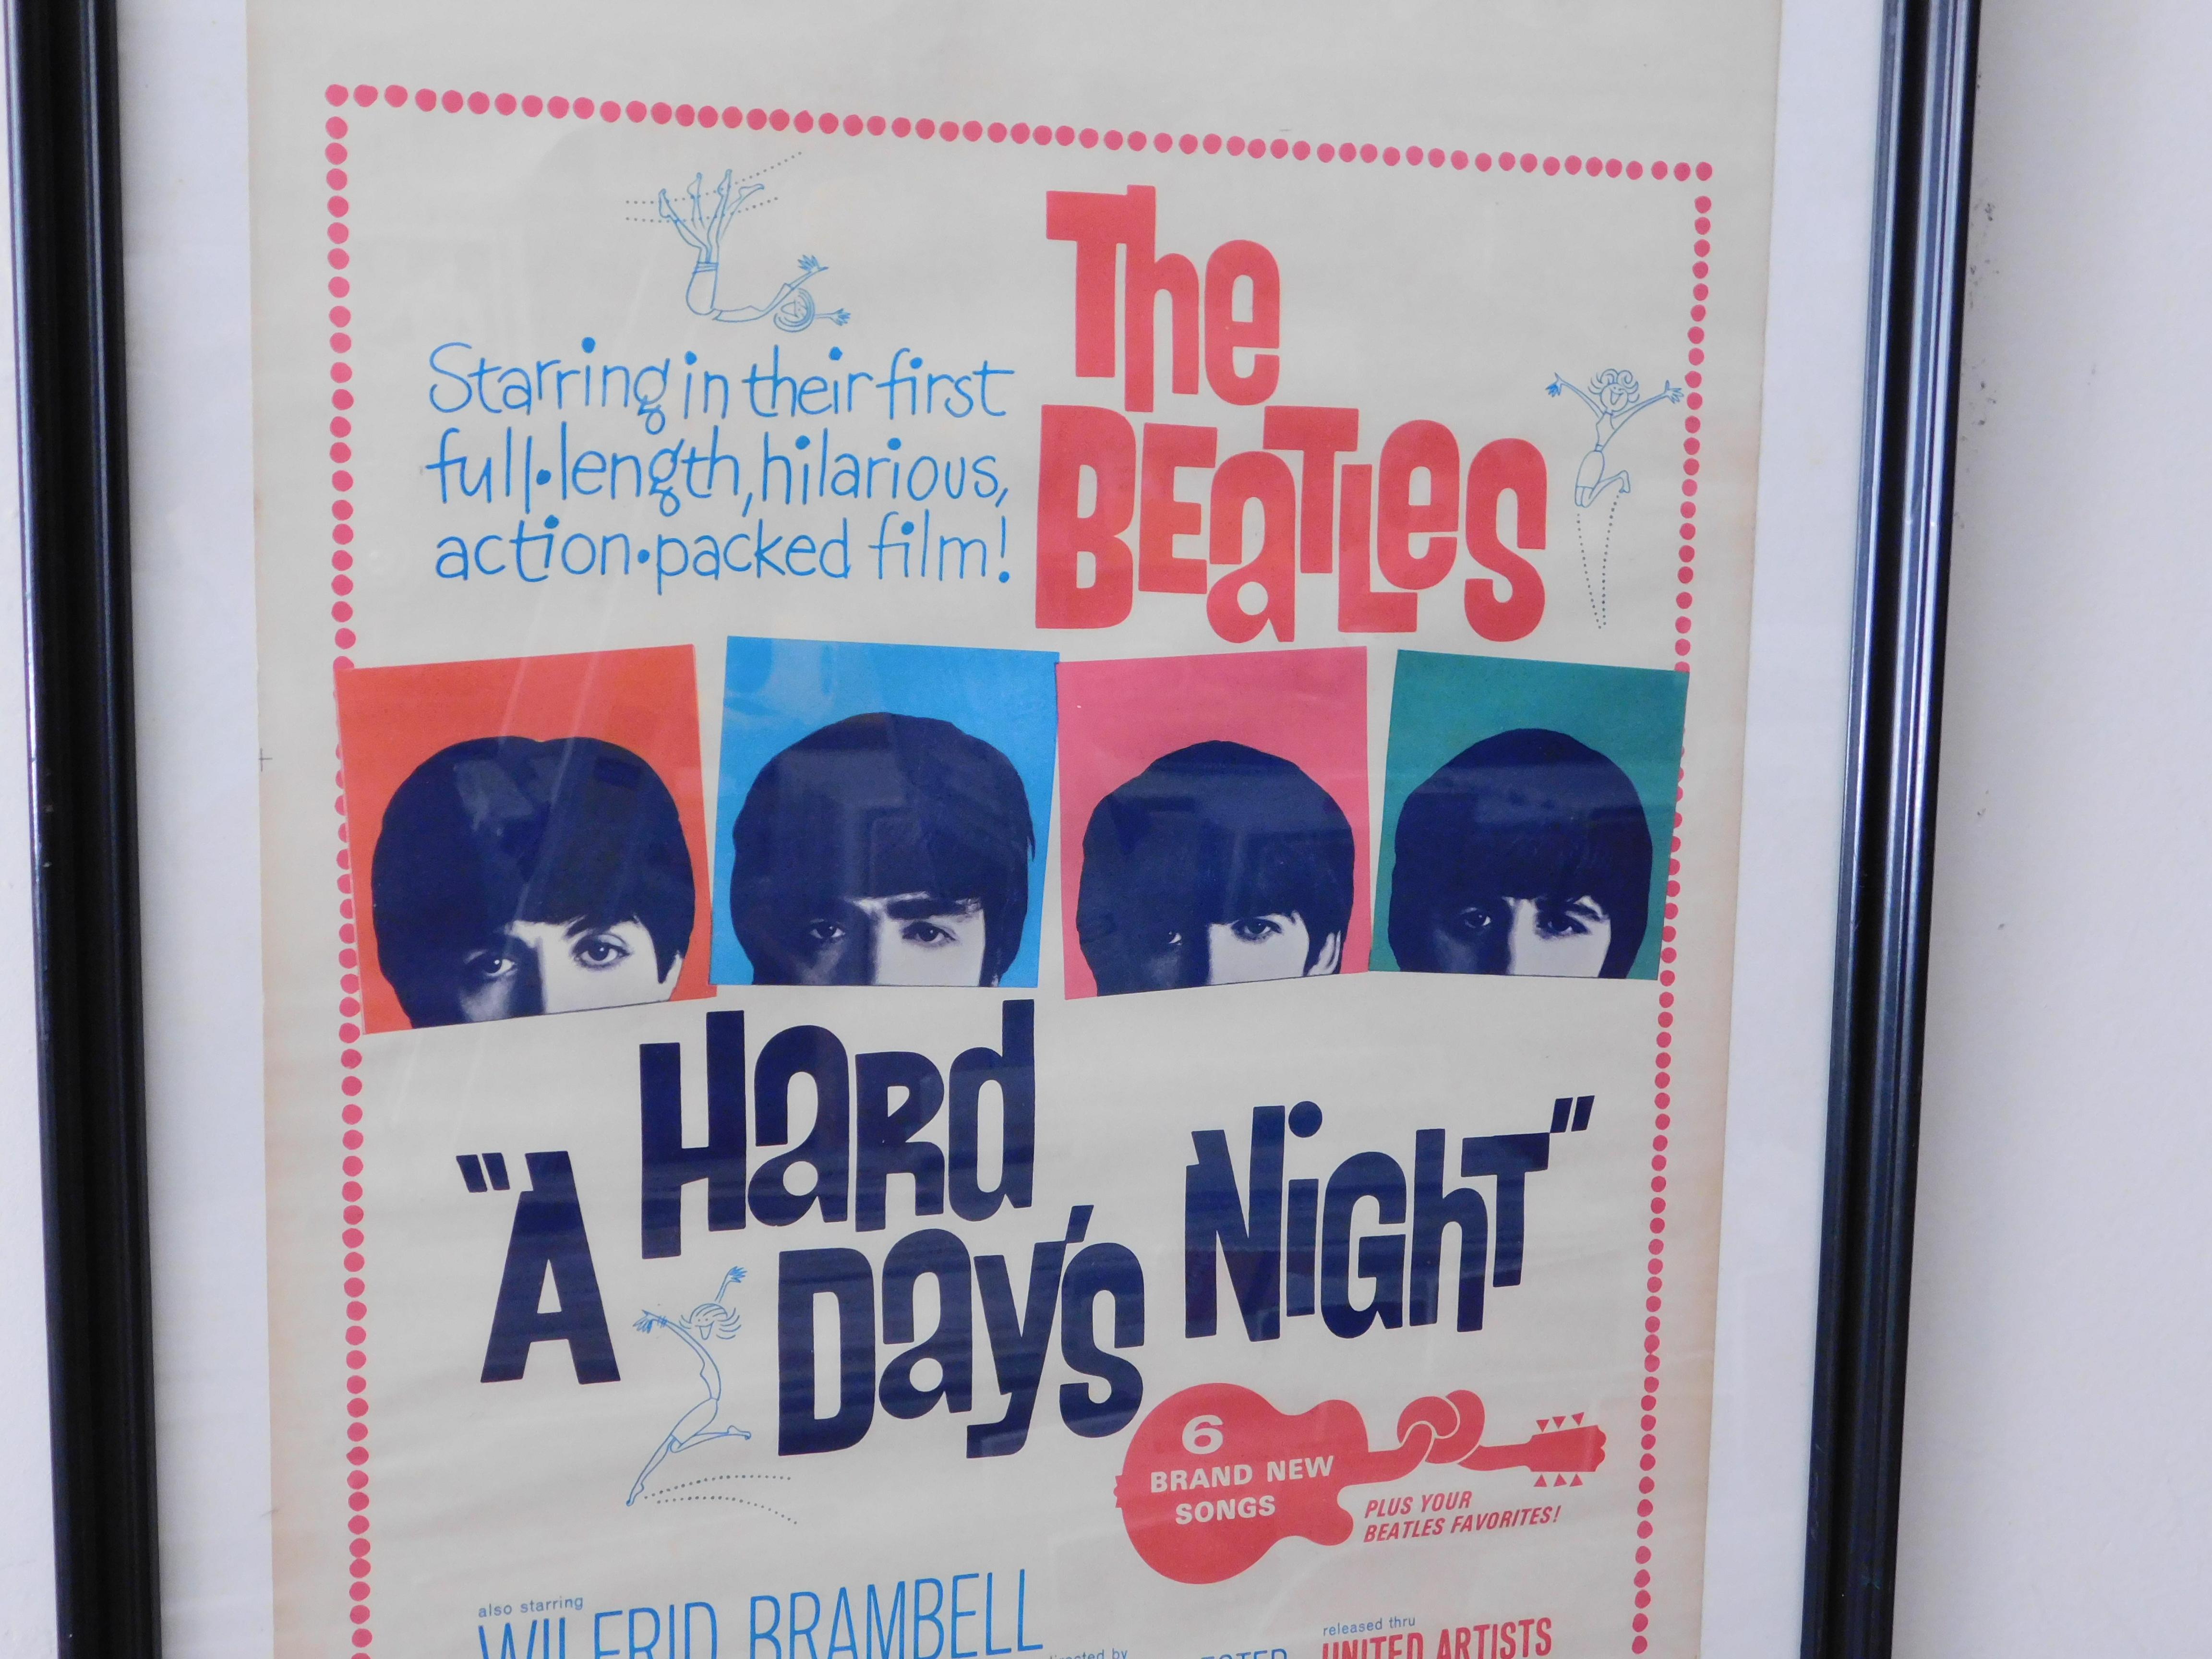 20th Century The Beatles Original a Hard Days Night Window Card For Sale